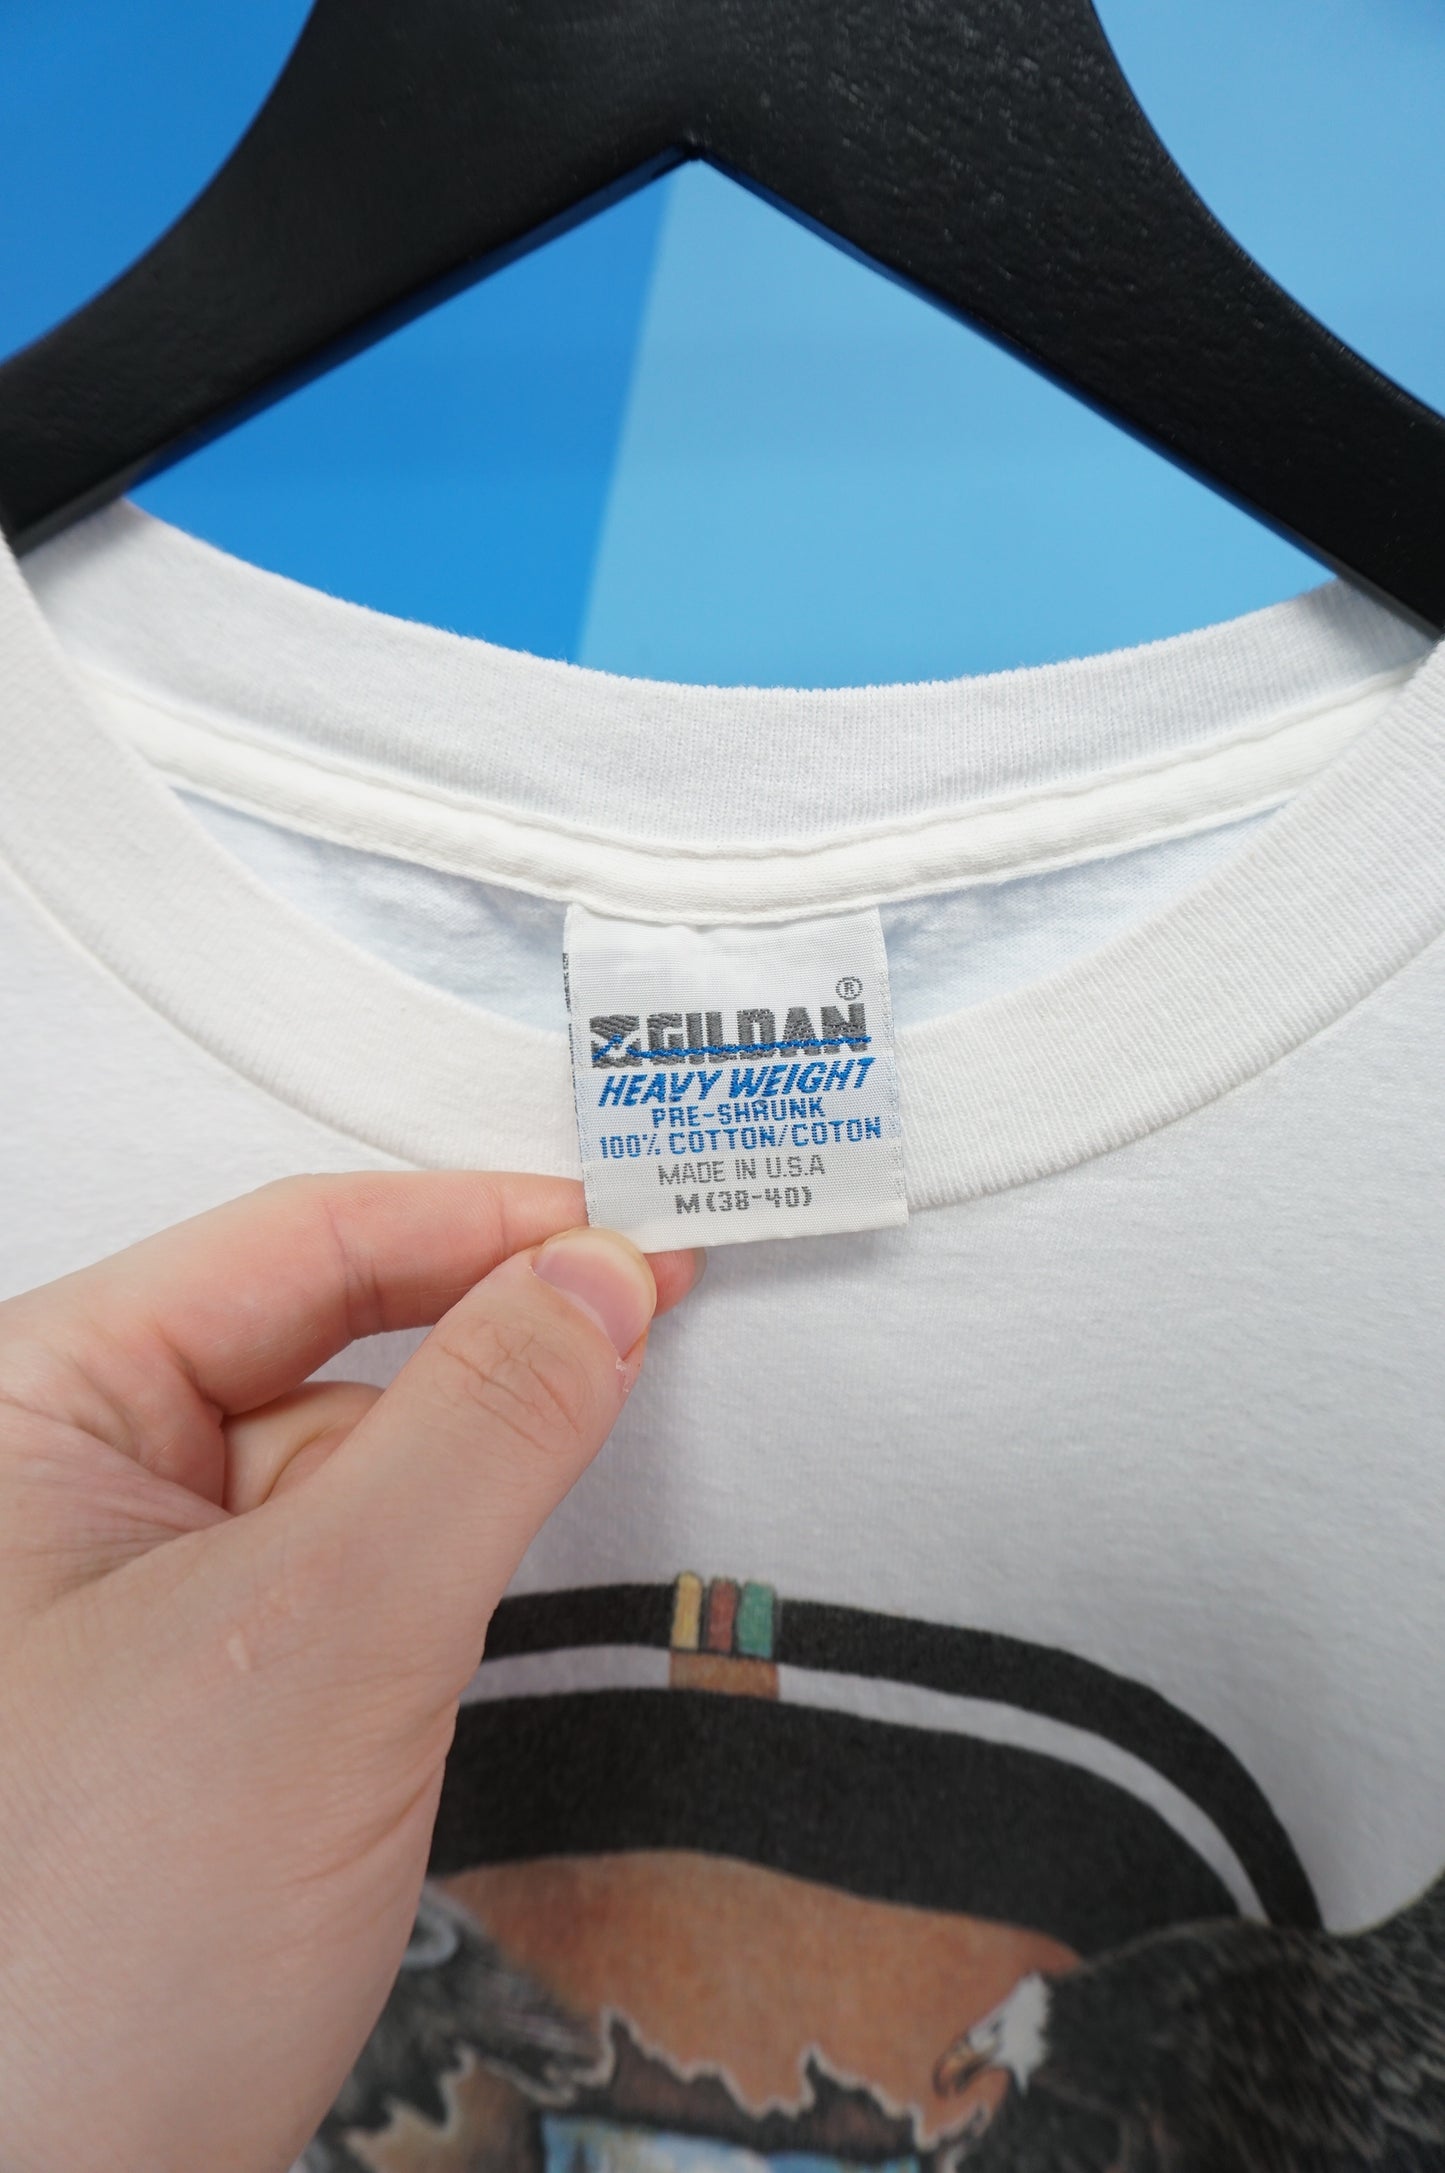 (M) Vtg Animal Encrusted Single Stitch Dreamcatcher T-Shirt